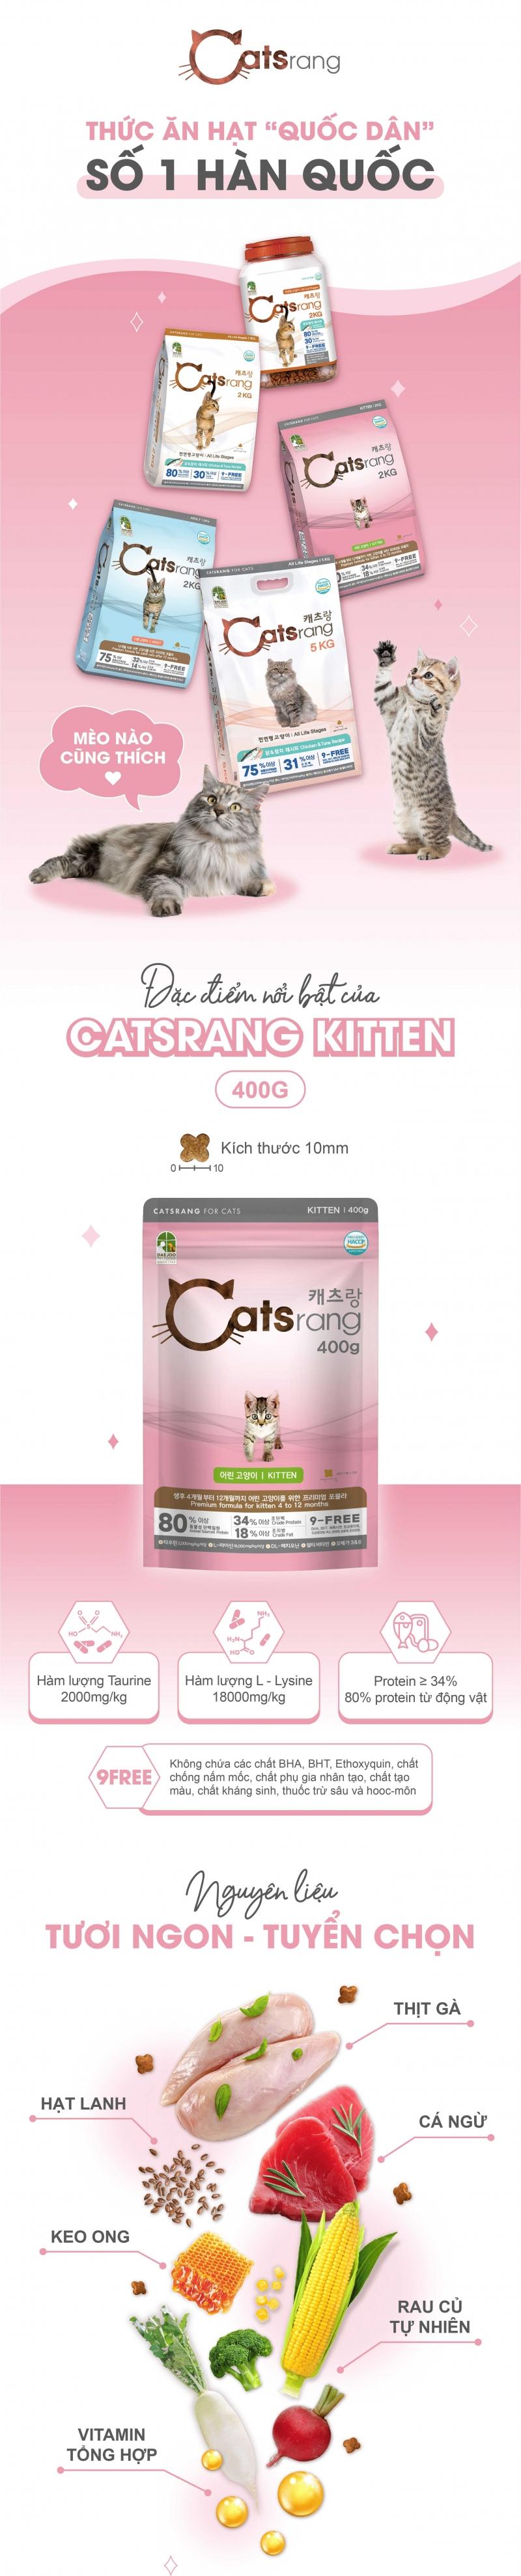 to-web-catsrang-kitten-400g-2-1692345914.jpg